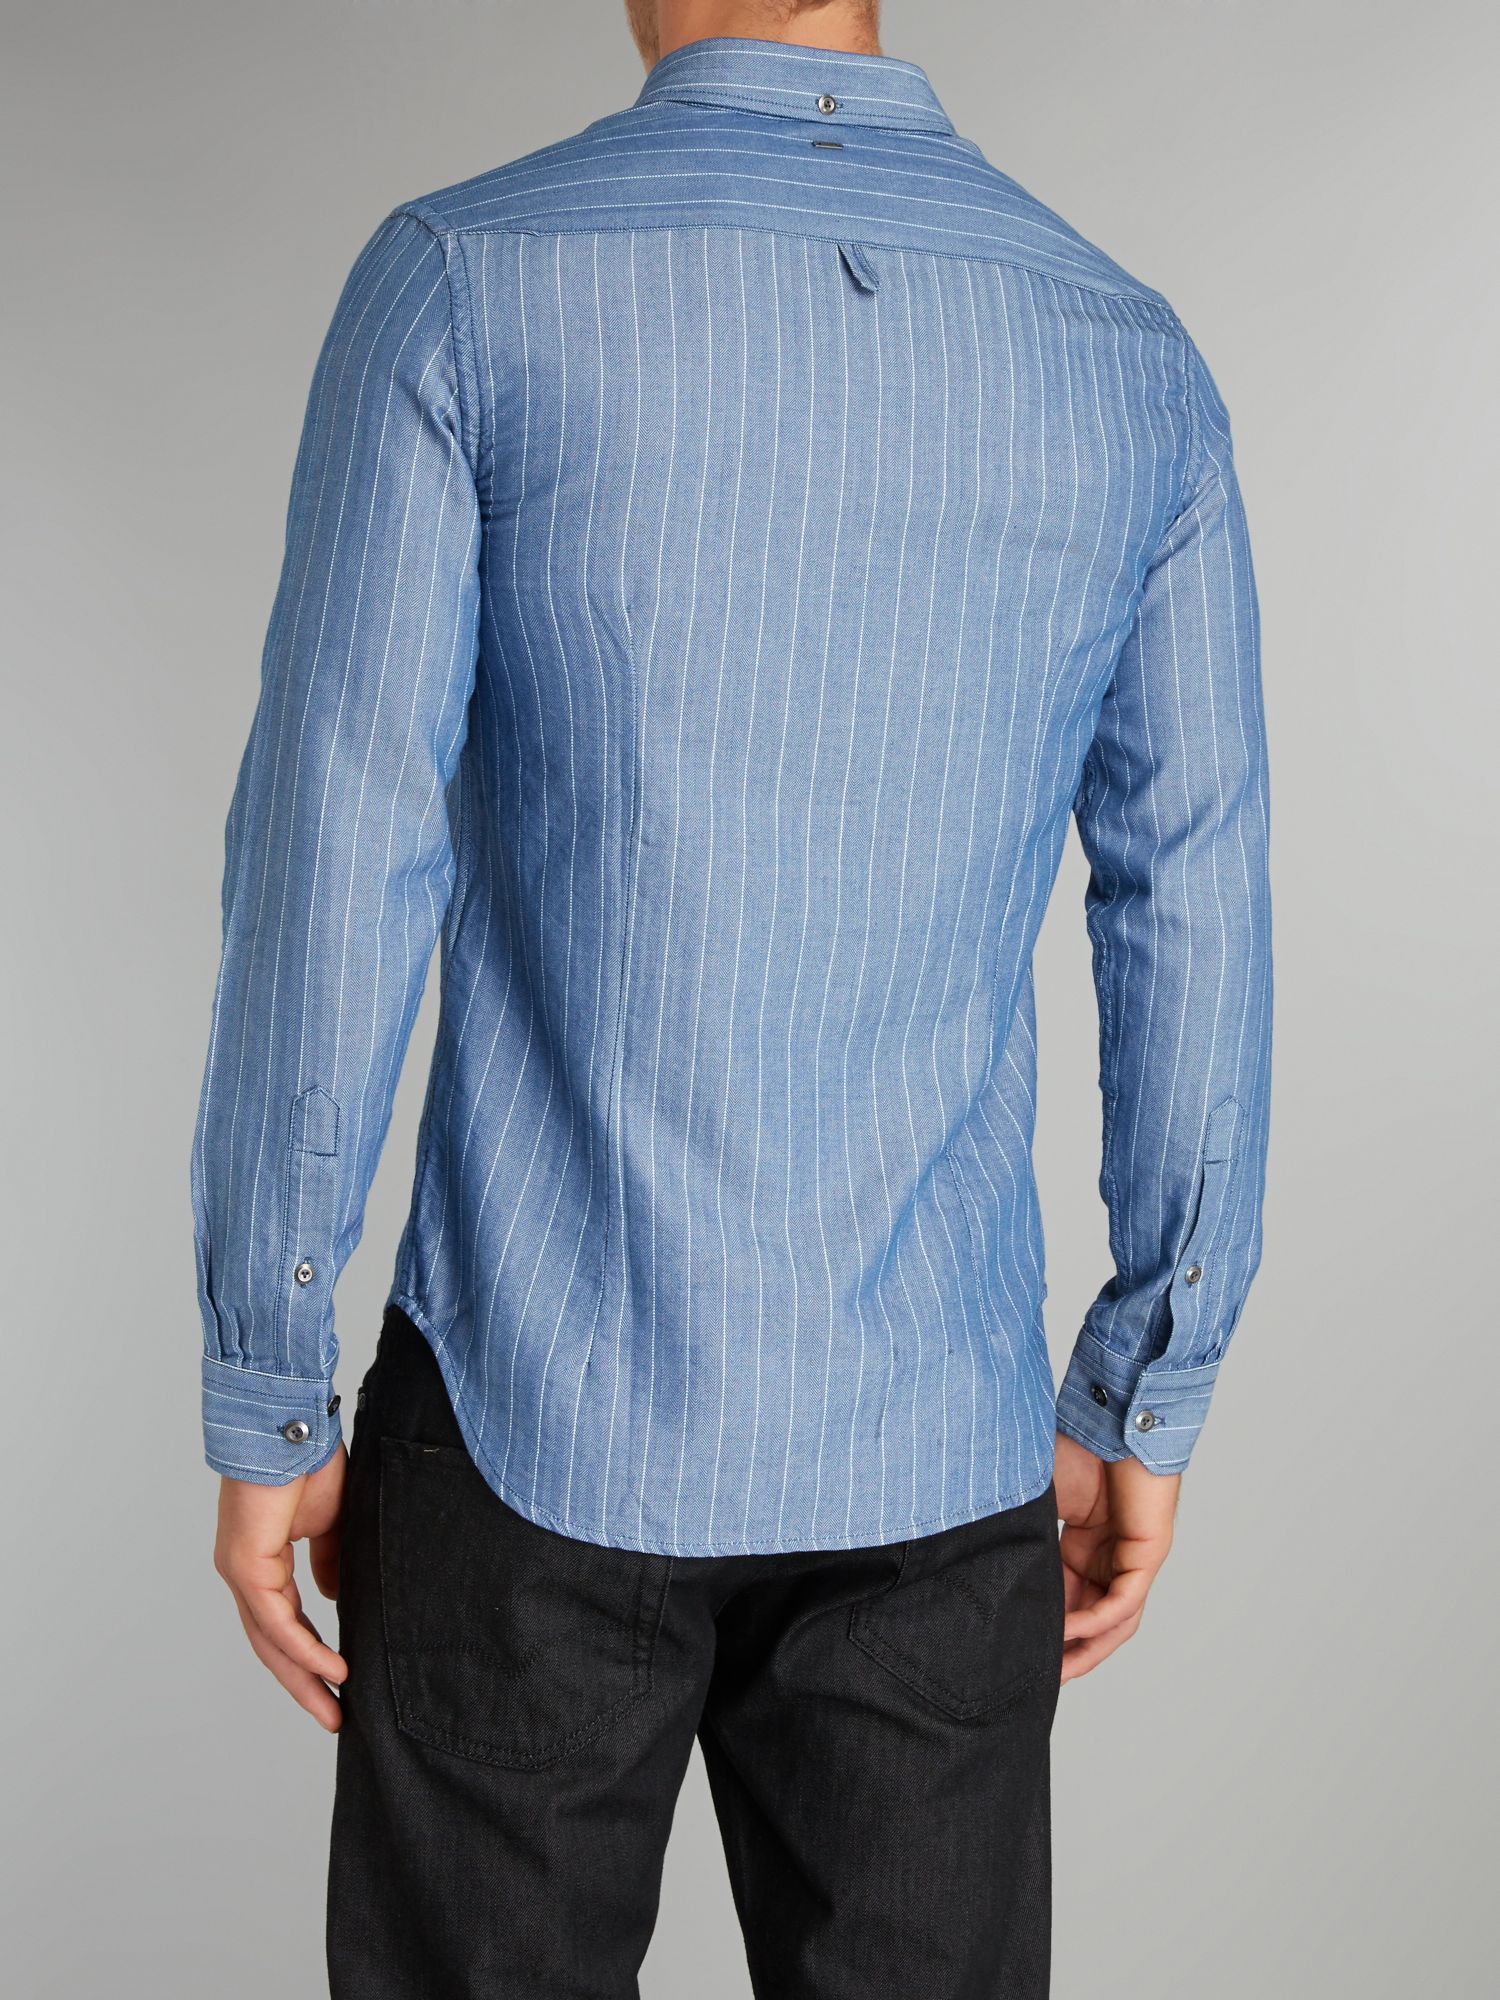 G-star raw Vertical Line Textured Shirt in Blue for Men | Lyst